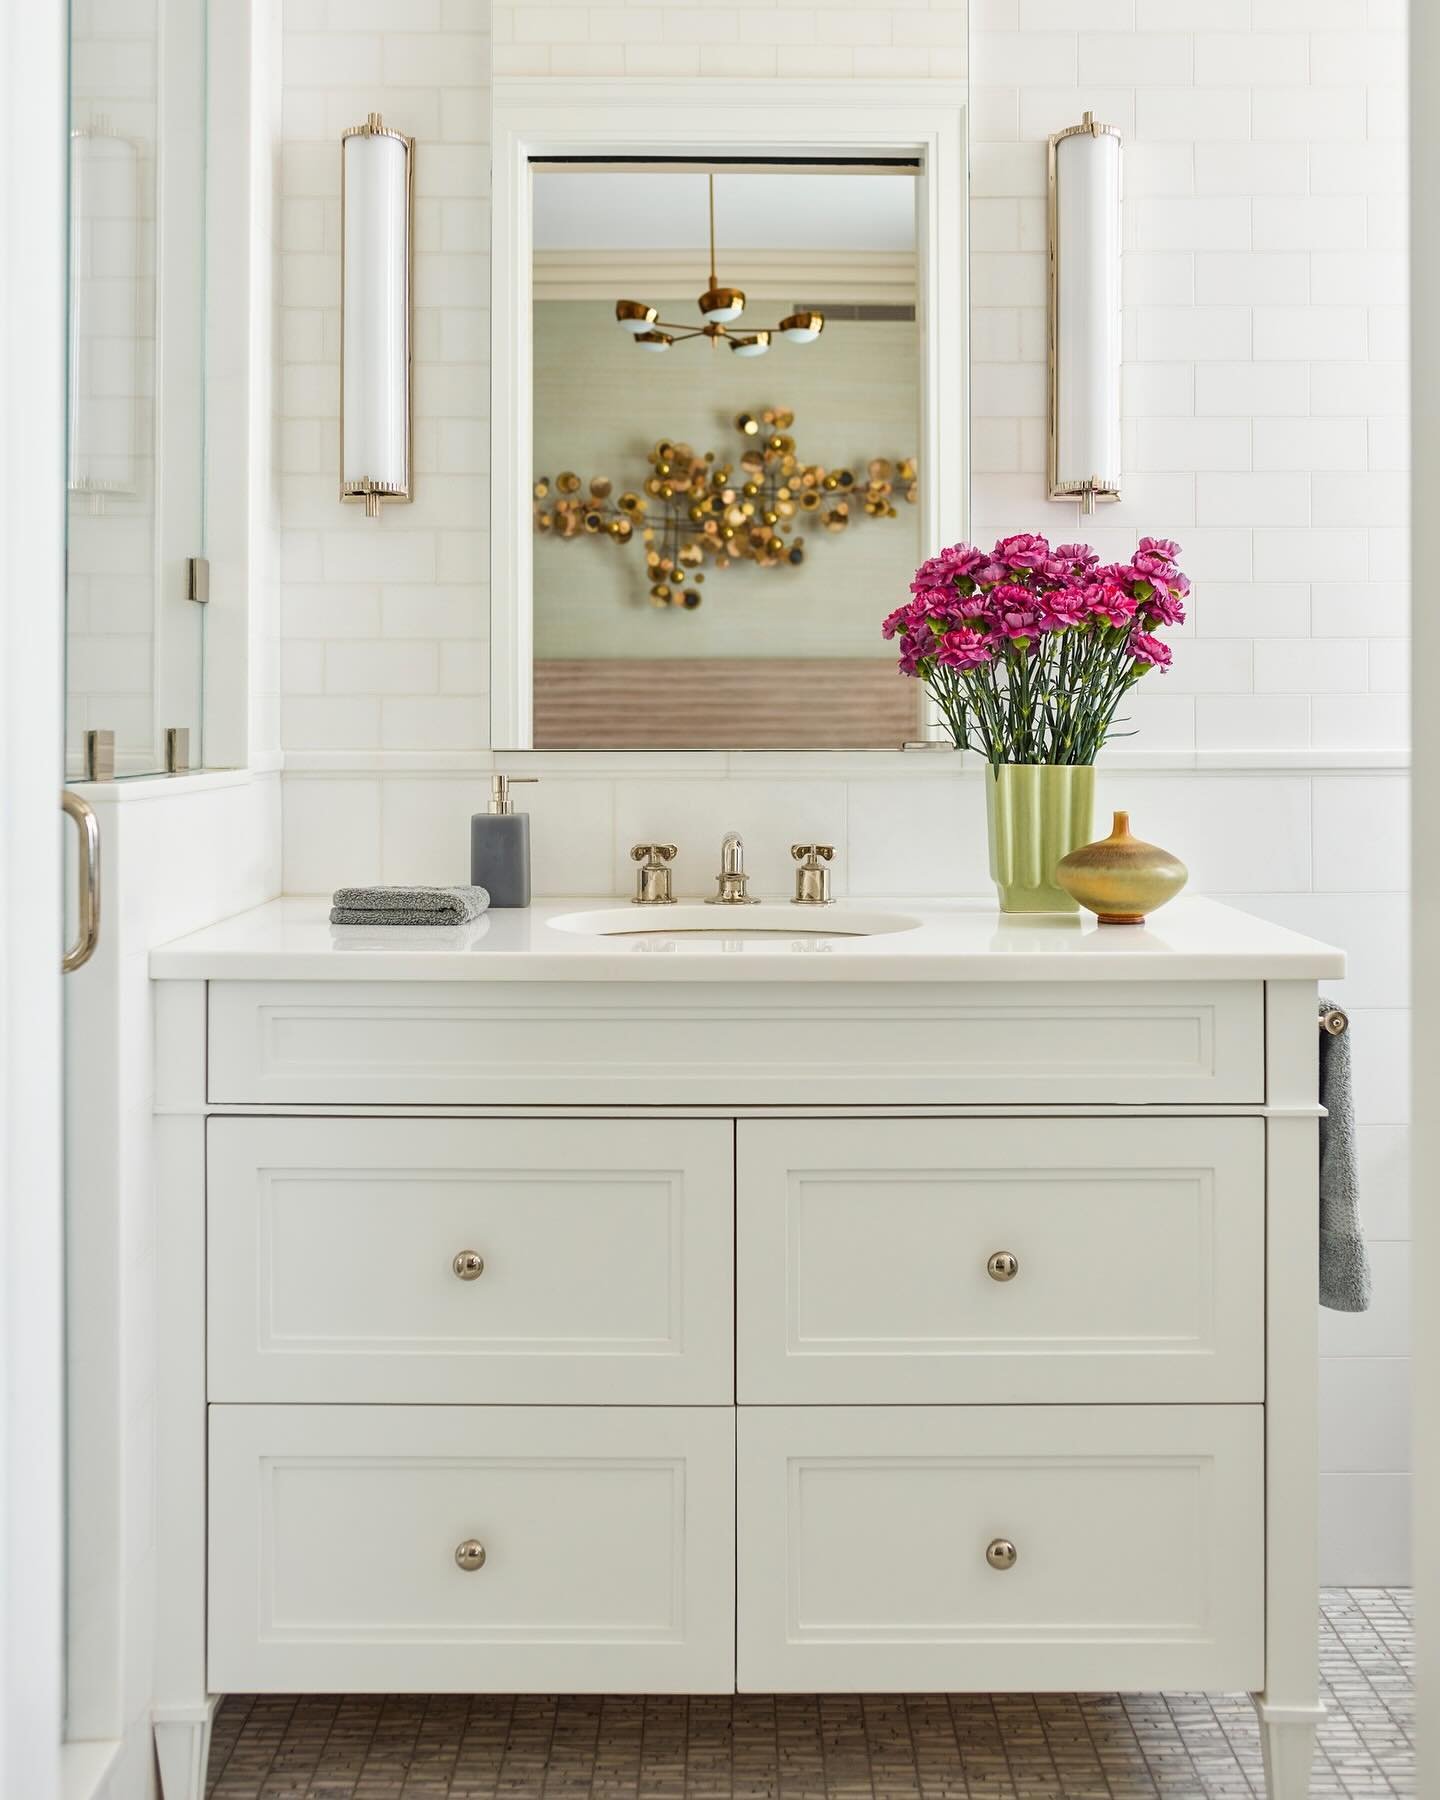 The classic white bathroom. We aim to create interest via detailing, texture, and the millwork. ⁠
⁠
⁠
⁠
⁠
⁠
⁠
📷 @ericpiasecki⁠
⁠
⁠
⁠
⁠
⁠
⁠
⁠
⁠
#mendelsongroup #gideonmendelson #designerdad #whatdesigncando #dreamhome #homedesign #interiordesigner #t